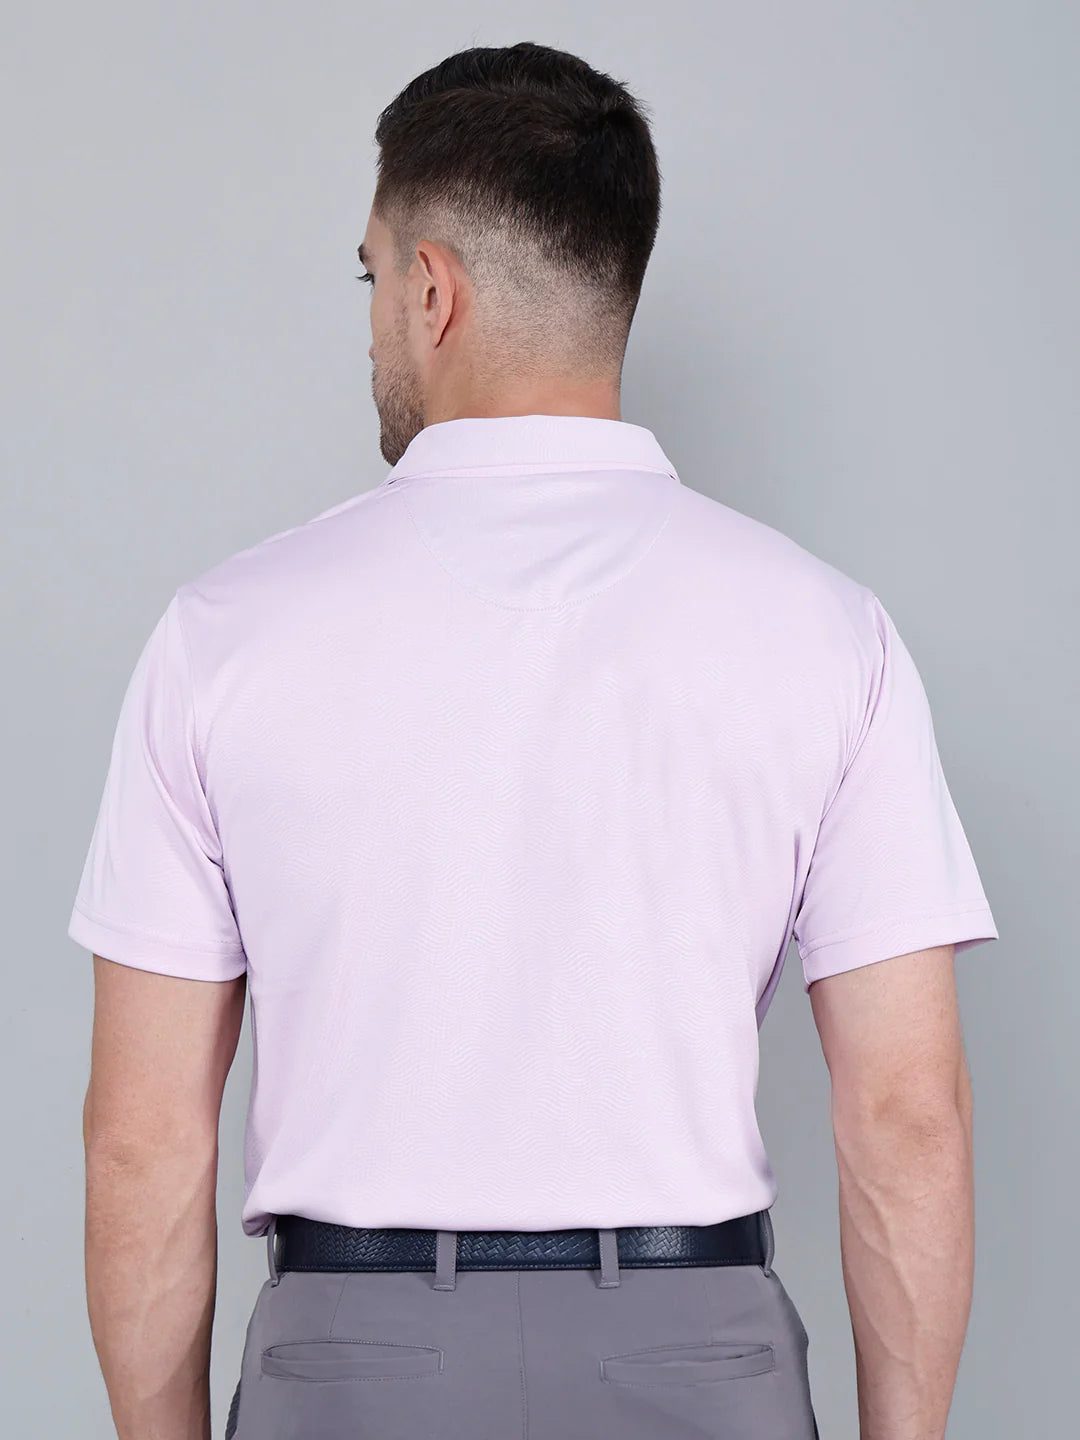 I-GOLF Men's Pink Printed Golf Polo T Shirt